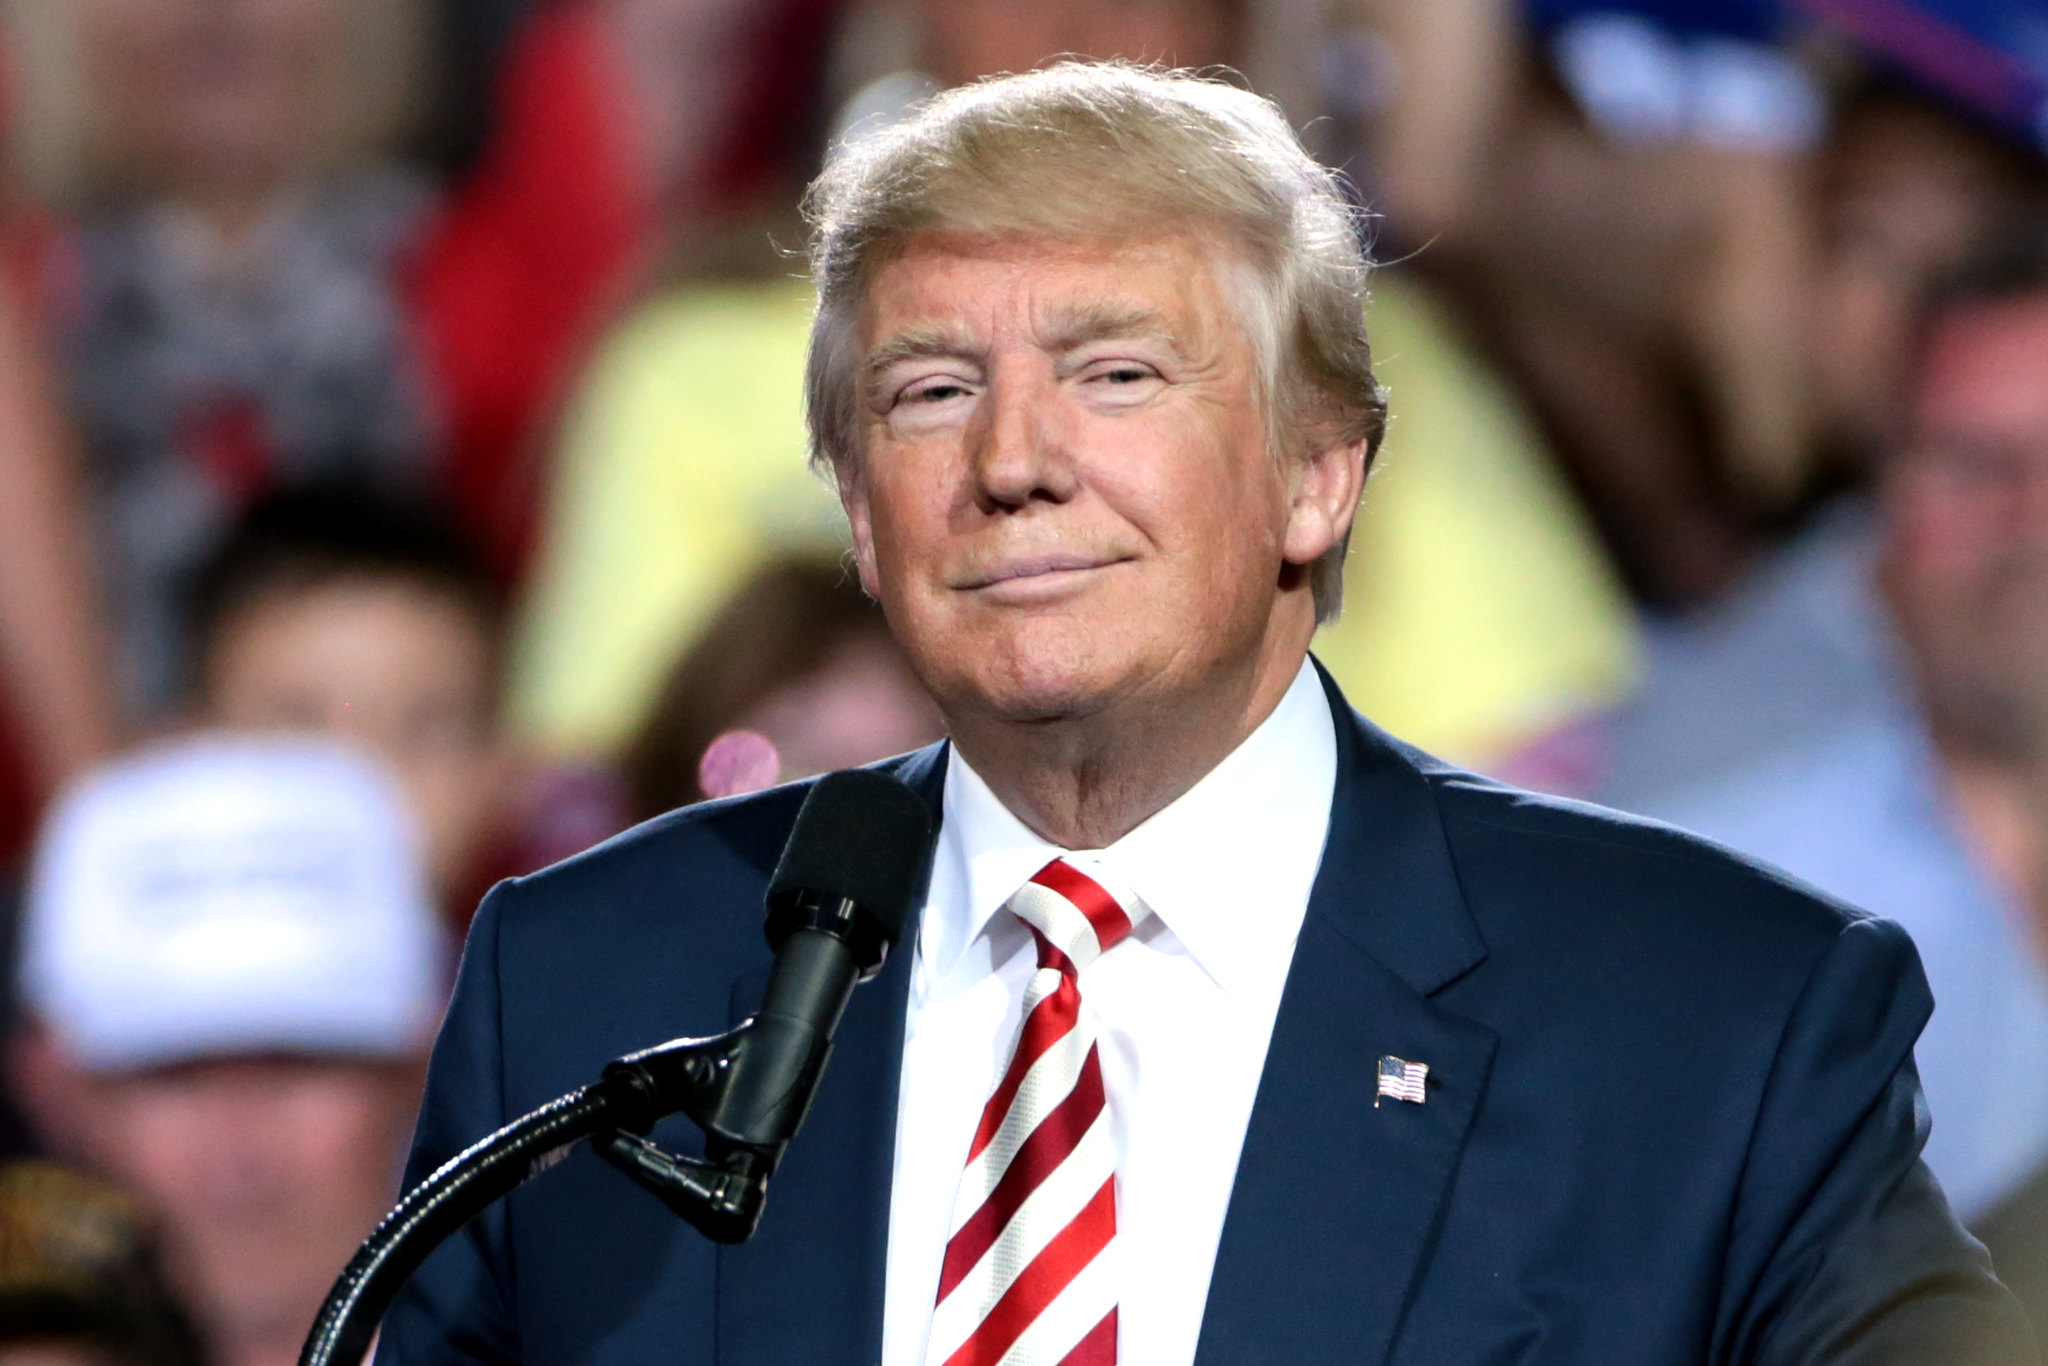 Donald Trump Will Run For President Again In 2024, Says America’s